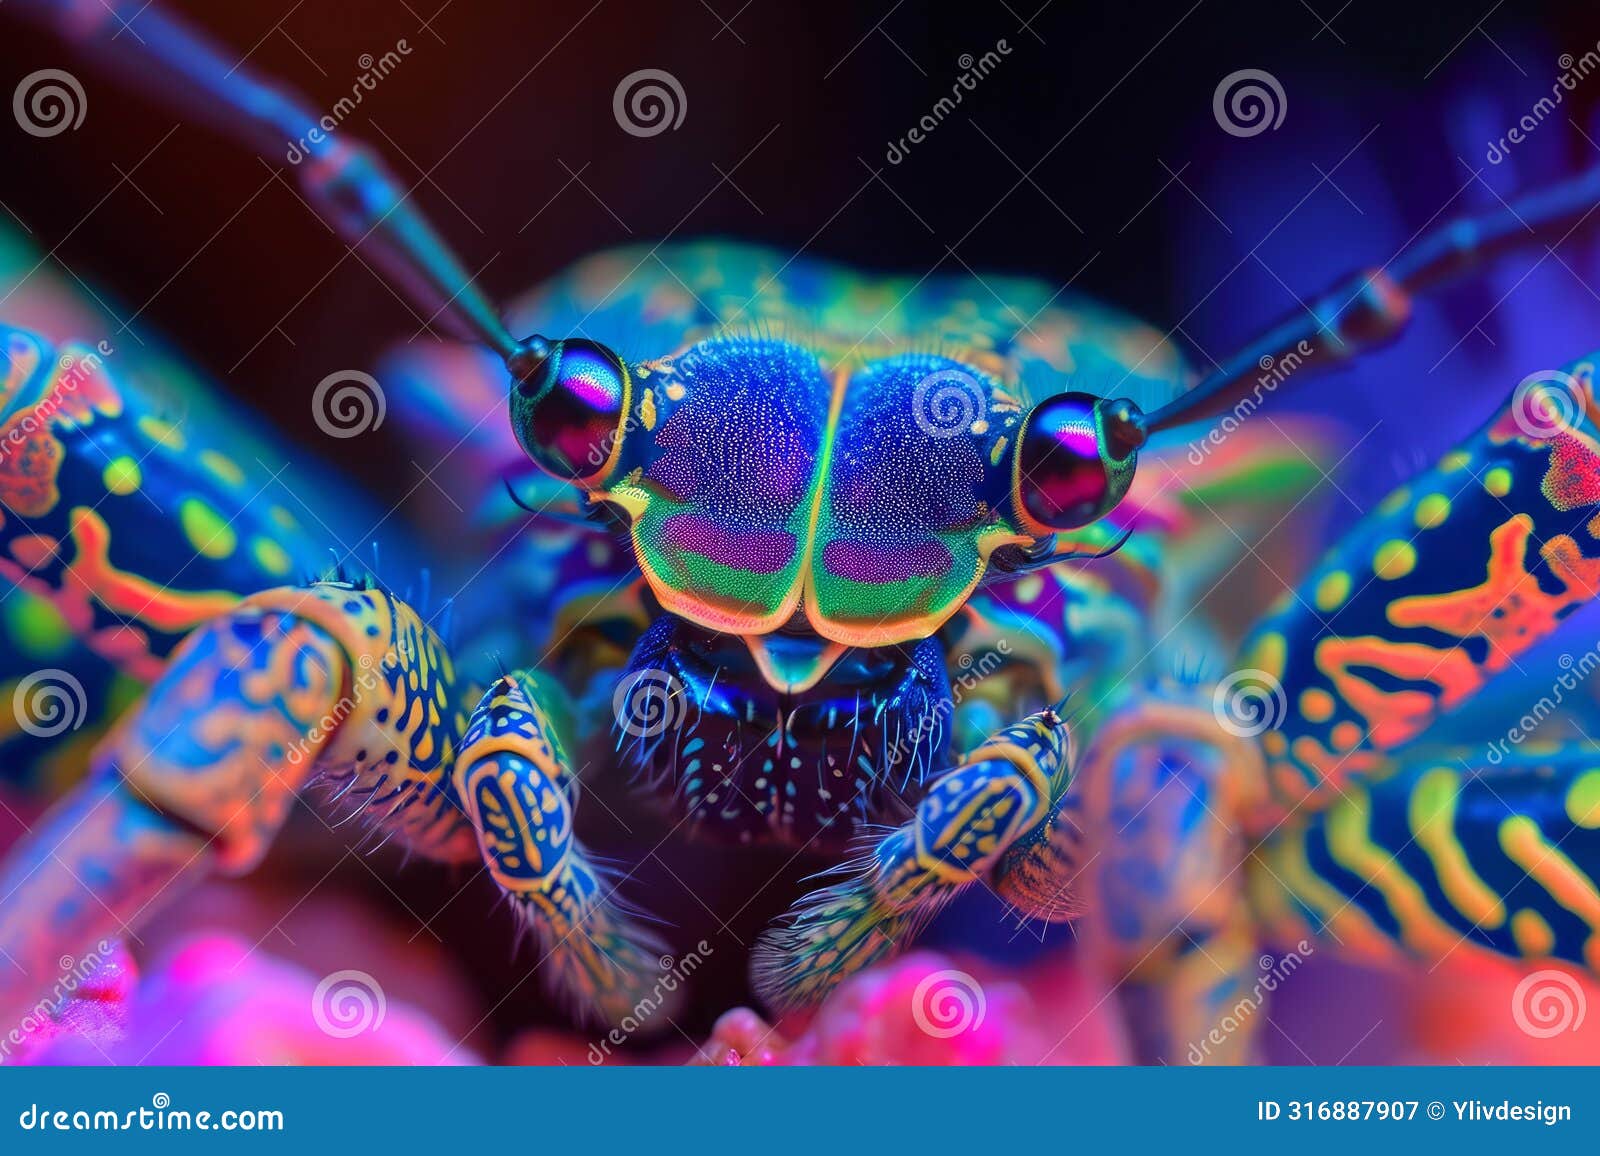 otherworldly arthropod antient neon image. generate ai